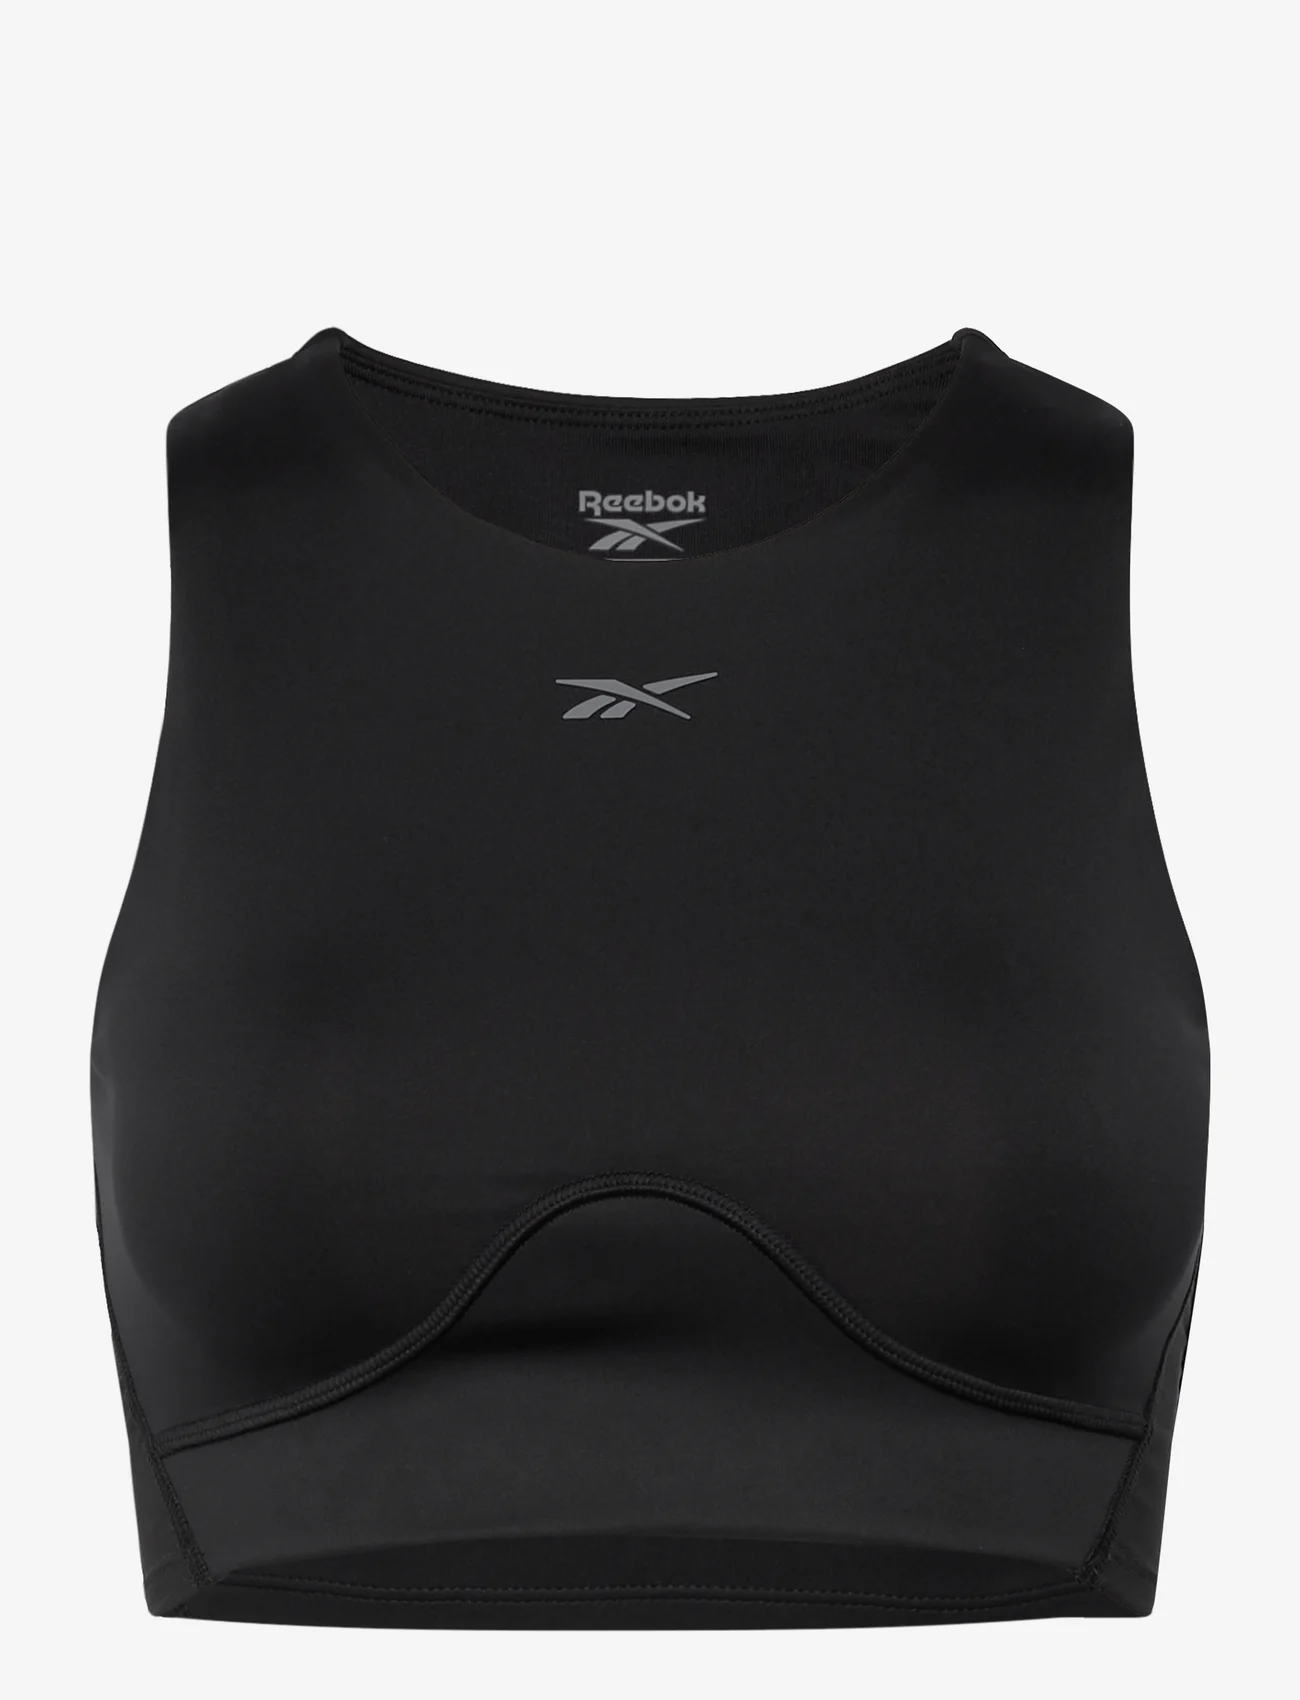 Reebok Performance - LUX CONTOUR CROP - t-shirt & tops - black - 0